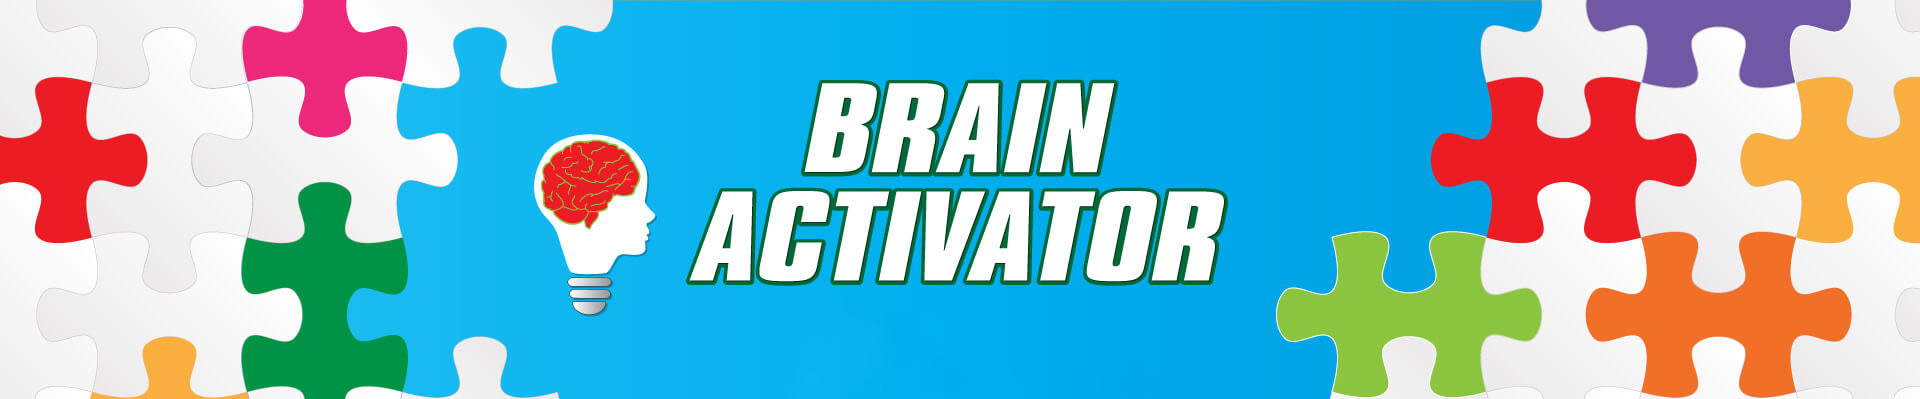 brain activator